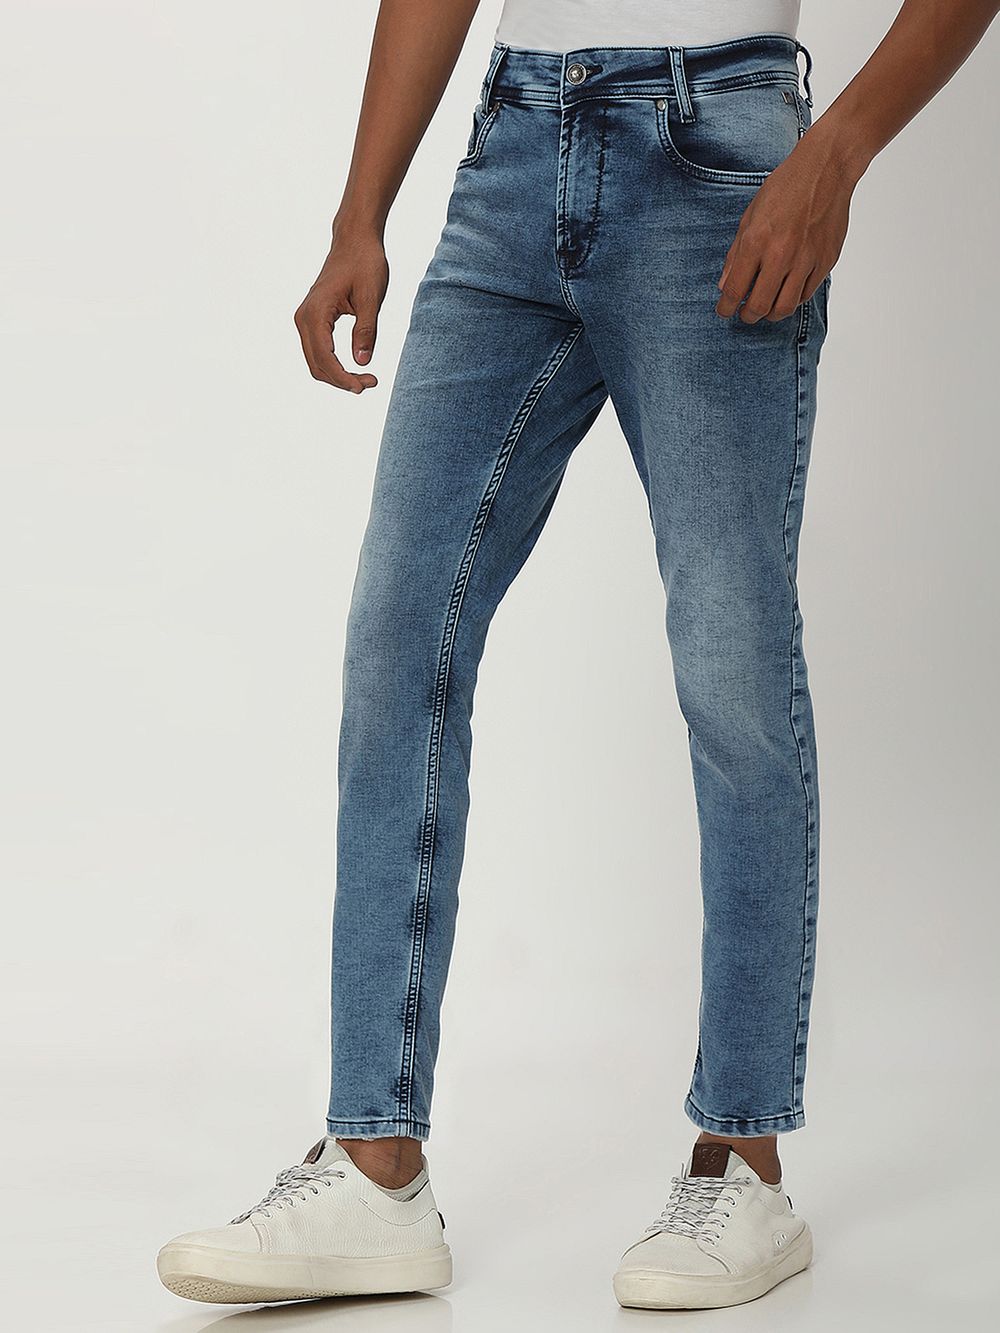 Indigo Blue Ankle Length Denim Deluxe Stretch Jeans